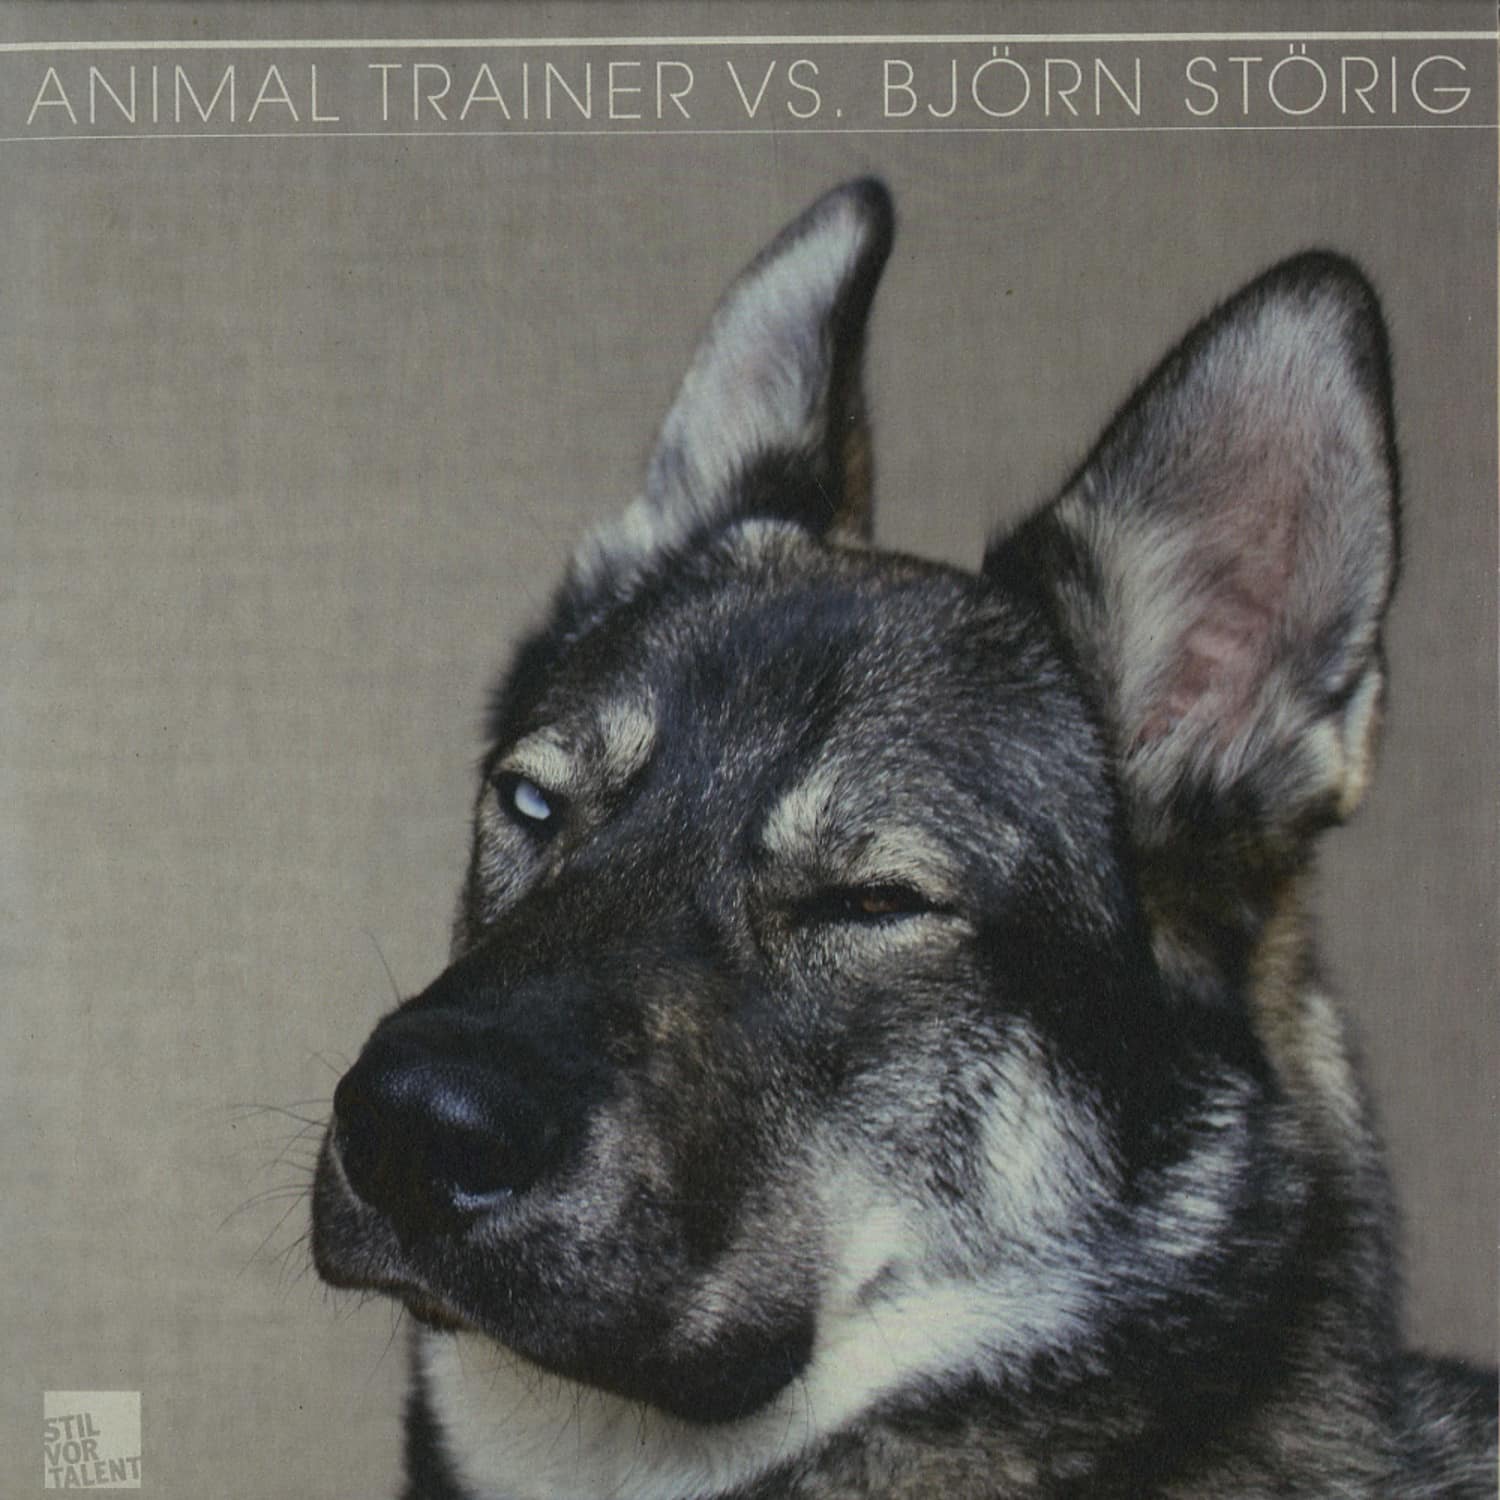 Animal Trainer / Bjoern Stoerig - ANIMAL TRAINER VS BJOERN STOERIG